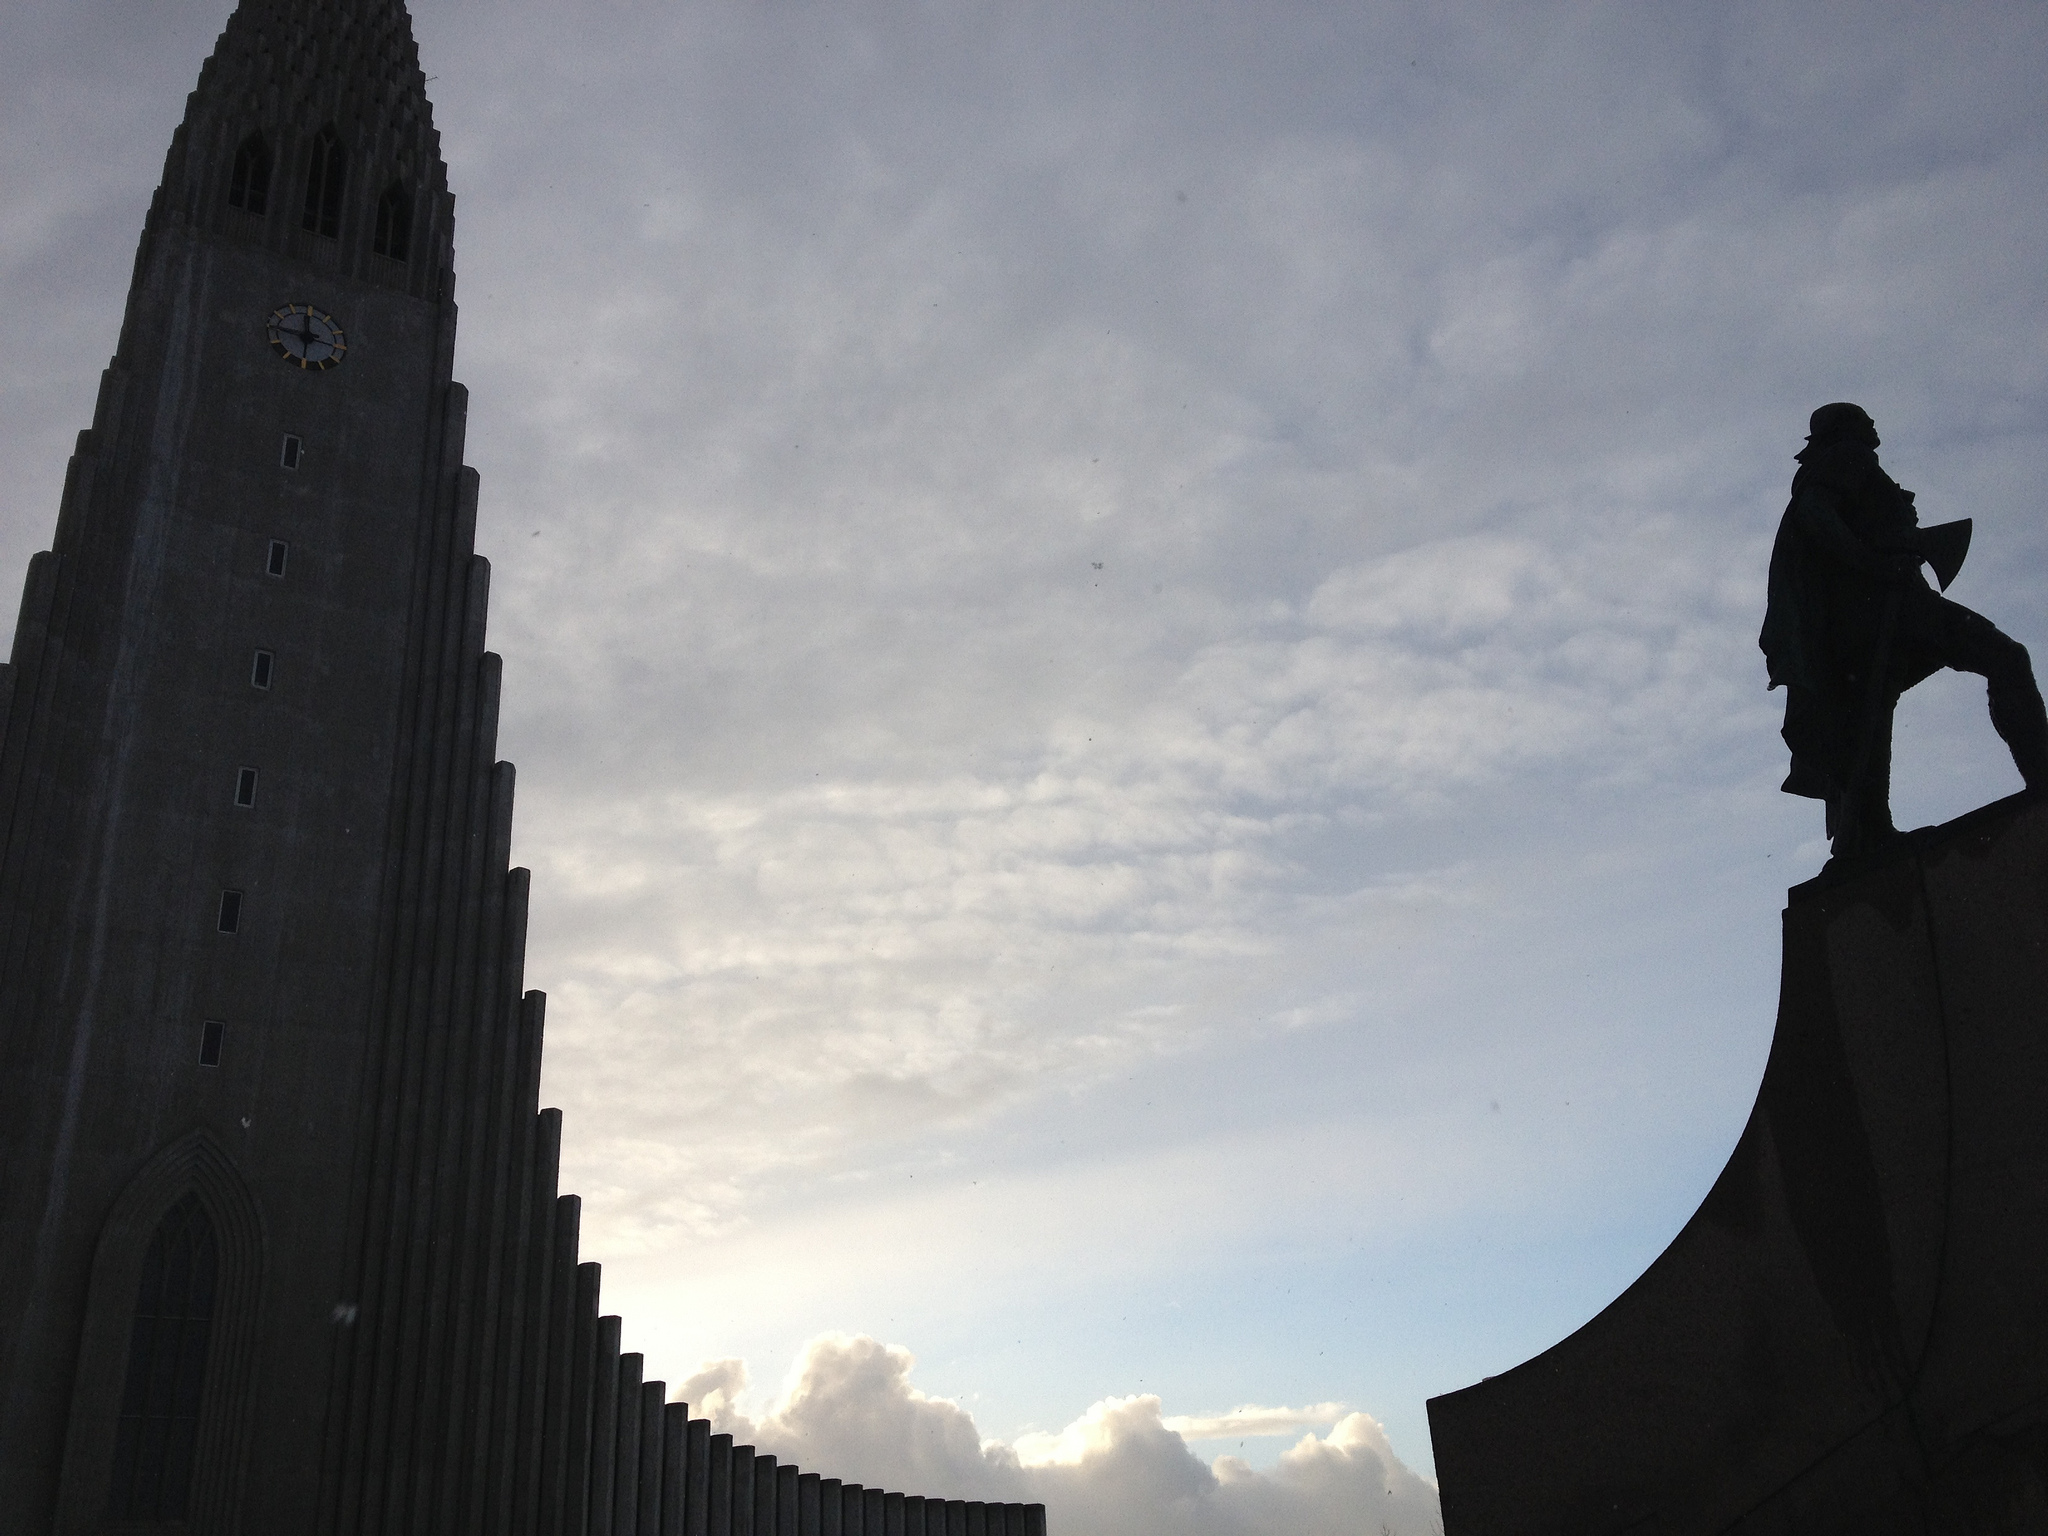 A rather dark photo of Hallgrímskirkja and the Leifur Eiríksson statue. In early February Reykjavik gets less than 8 hours daylight.